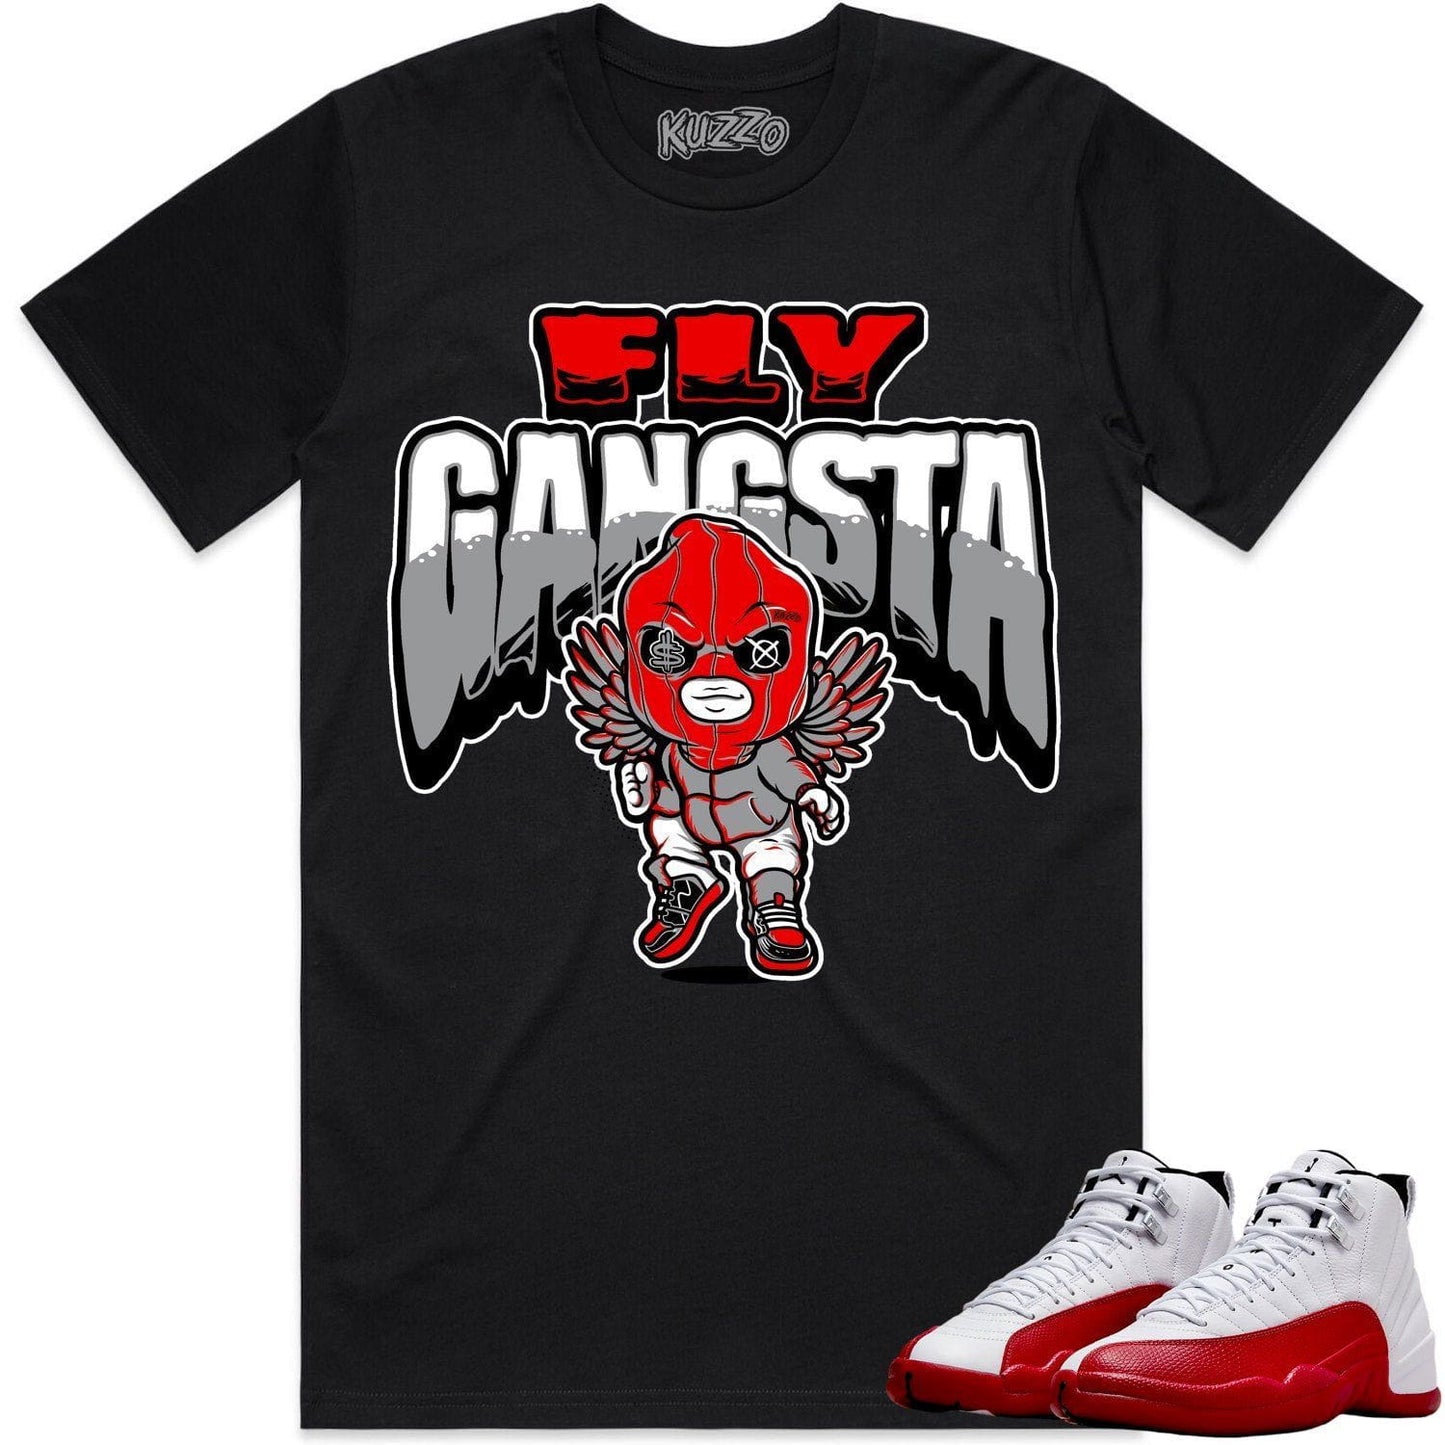 Cherry 12s Shirt - Jordan Retro 12 Cherry Shirts - Red Fly Gangsta